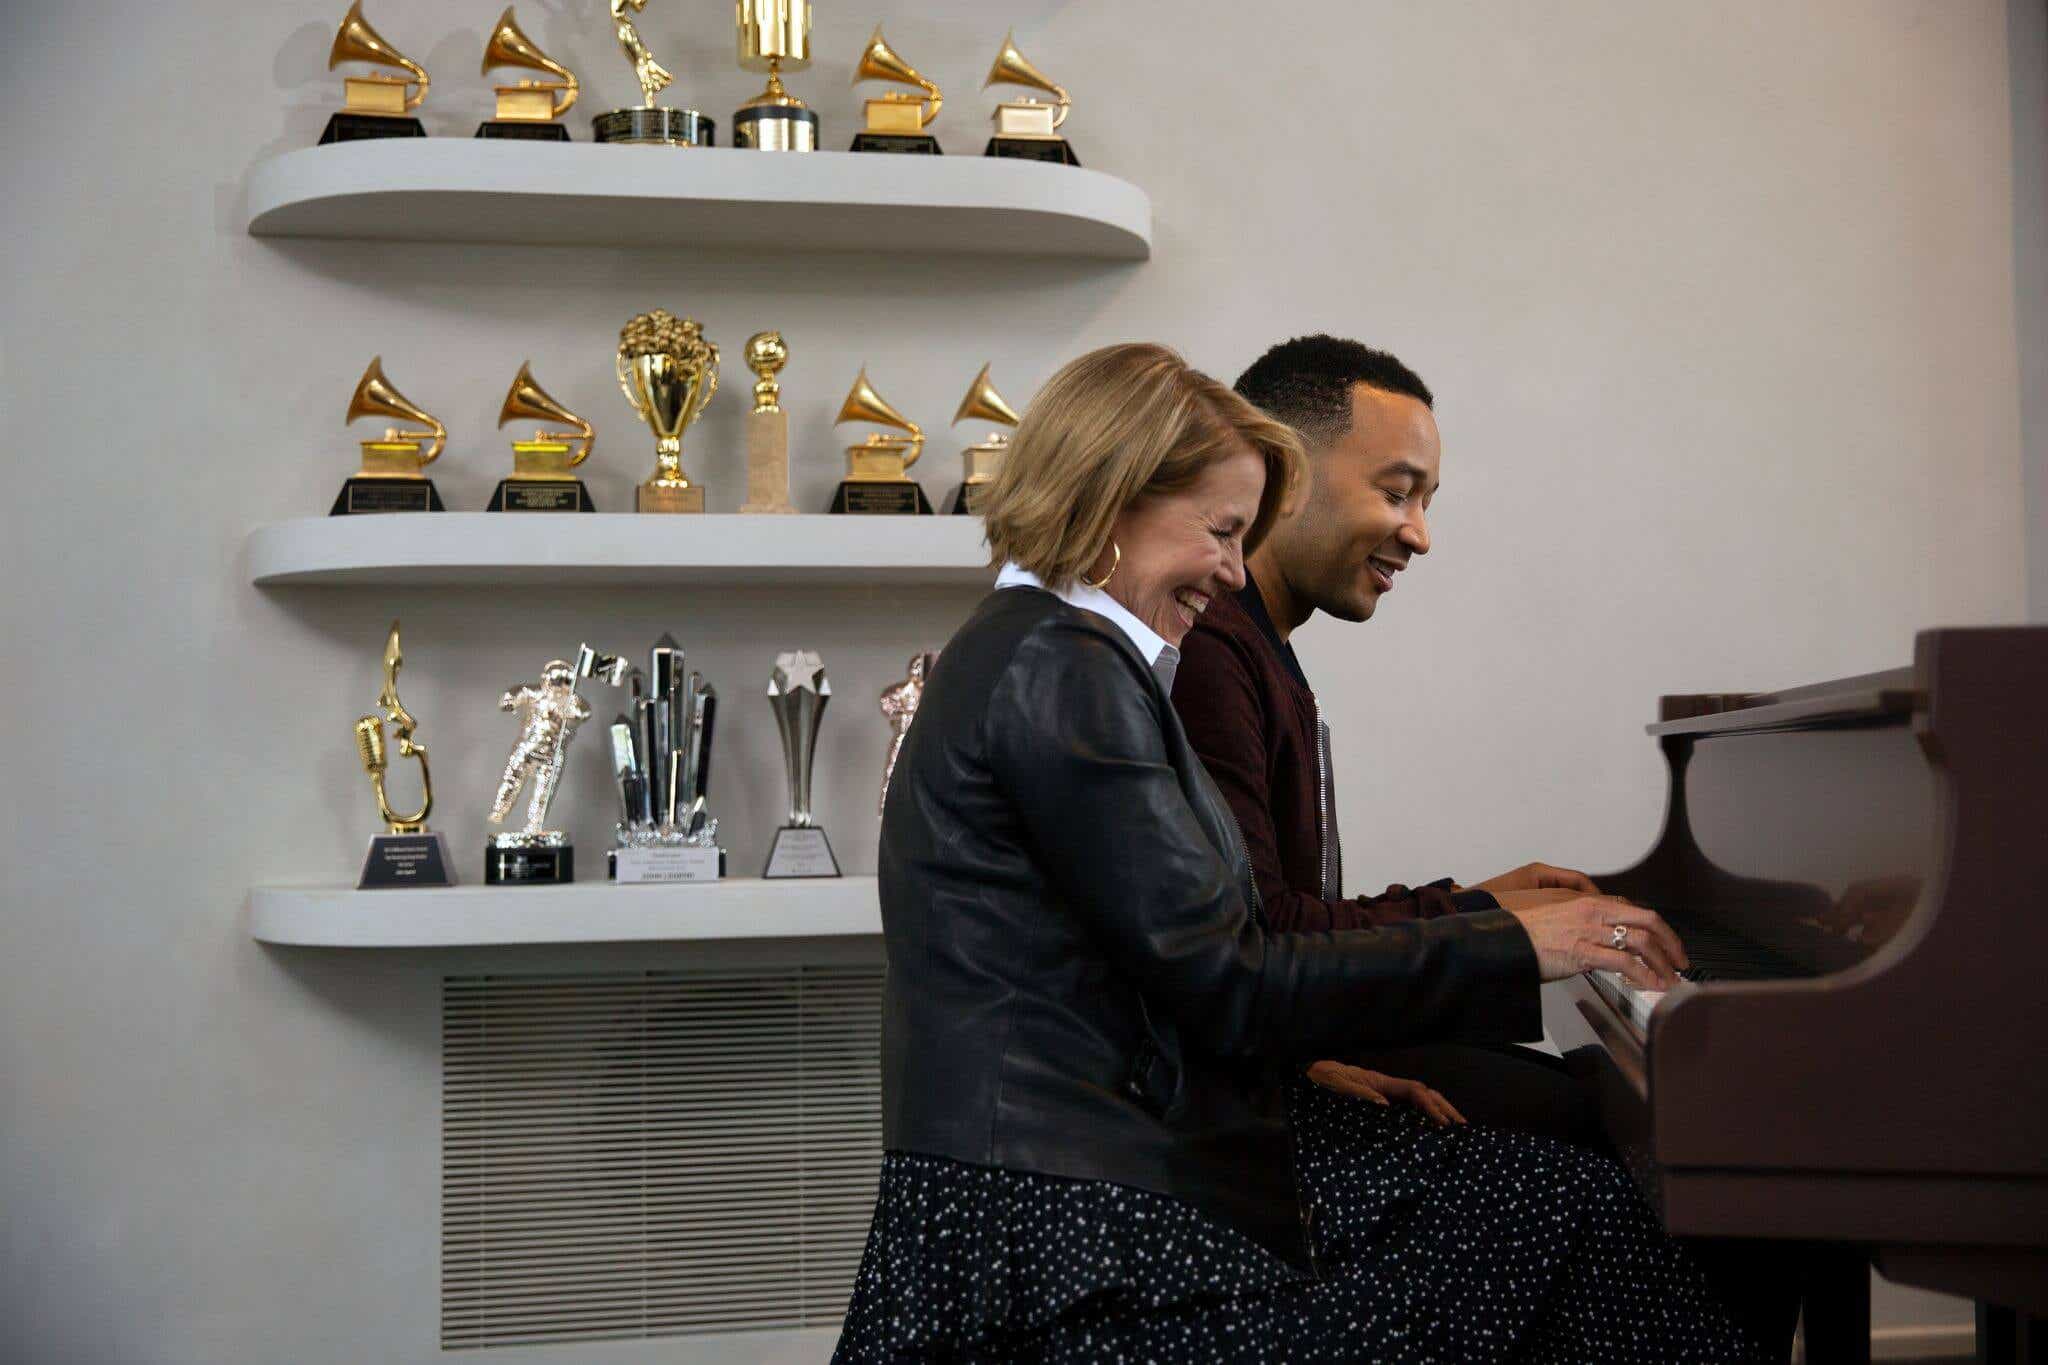 In Gillette's #TheBestMenCanBe series, Katie spoke with singer-songwriter John Legend.